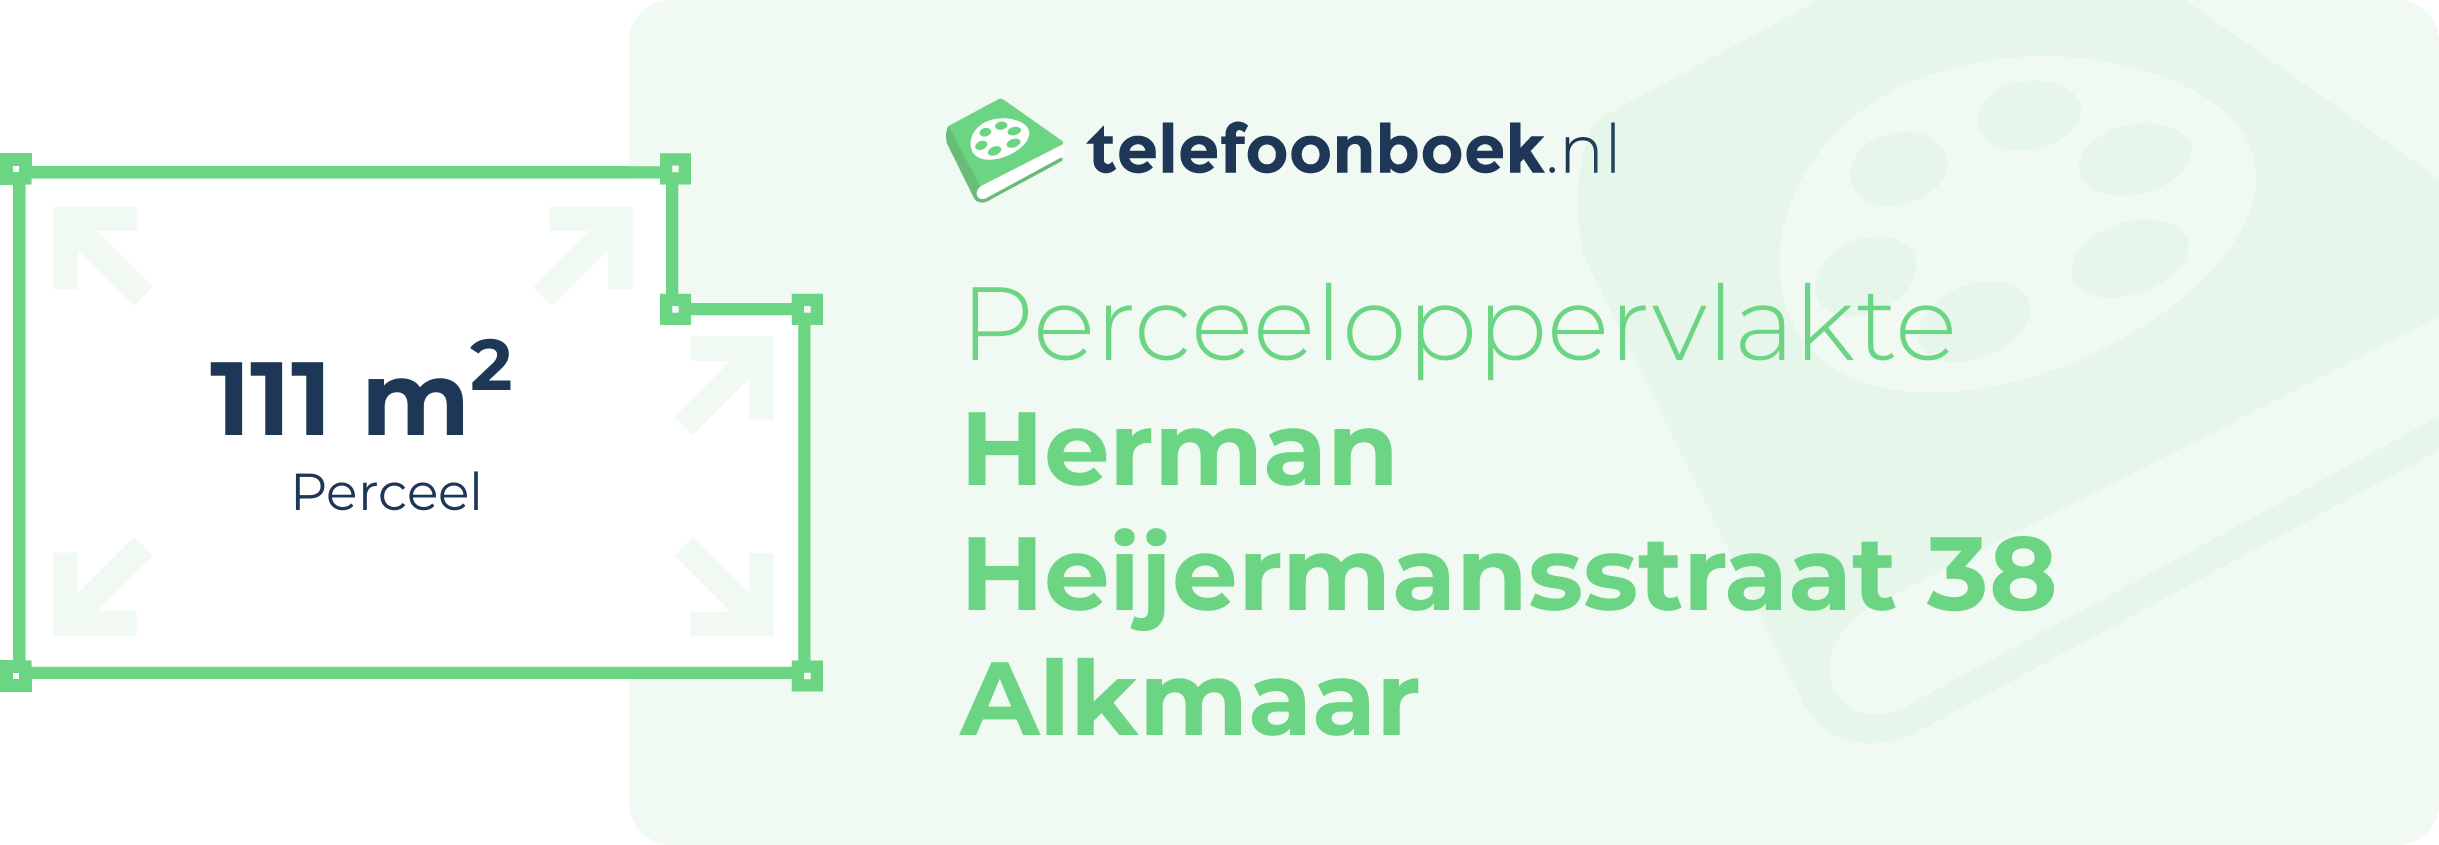 Perceeloppervlakte Herman Heijermansstraat 38 Alkmaar